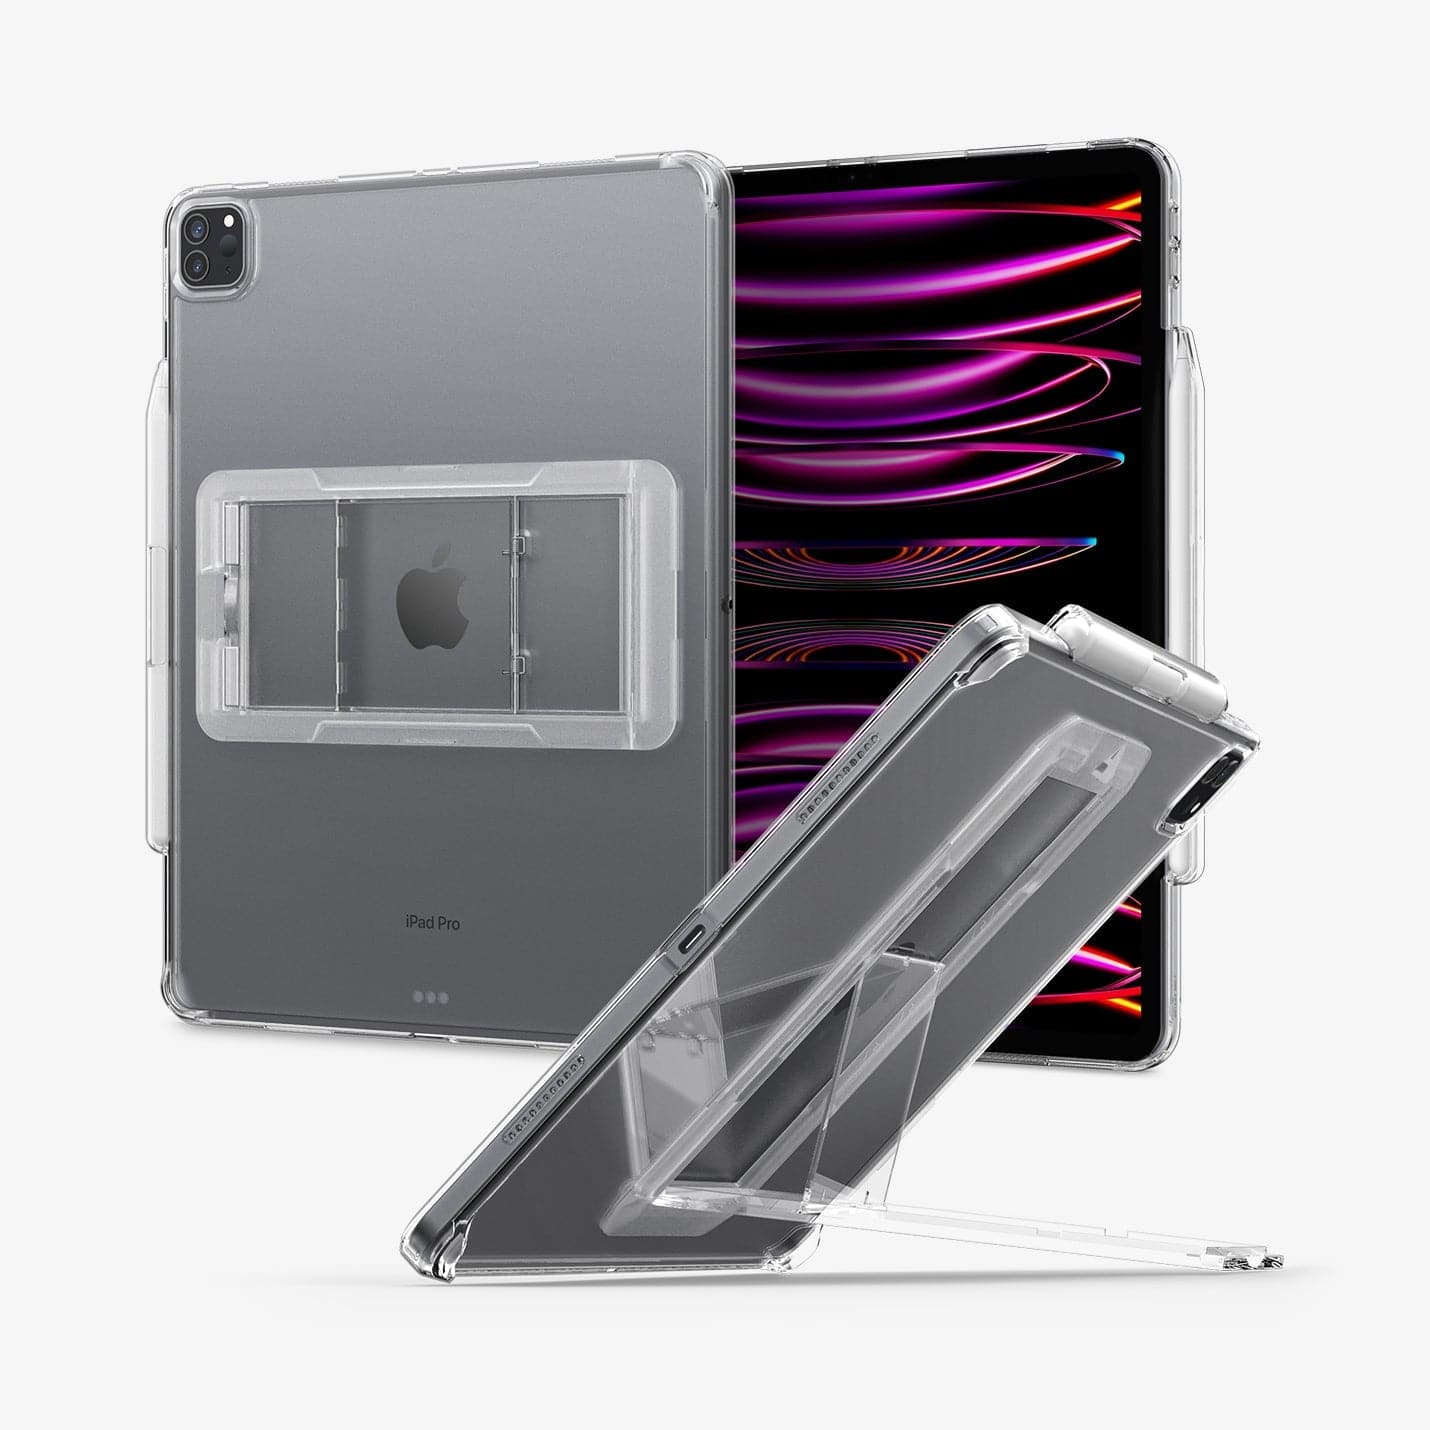 iPad Pro Series Case Air Skin Hybrid S - Spigen.com Official Site 